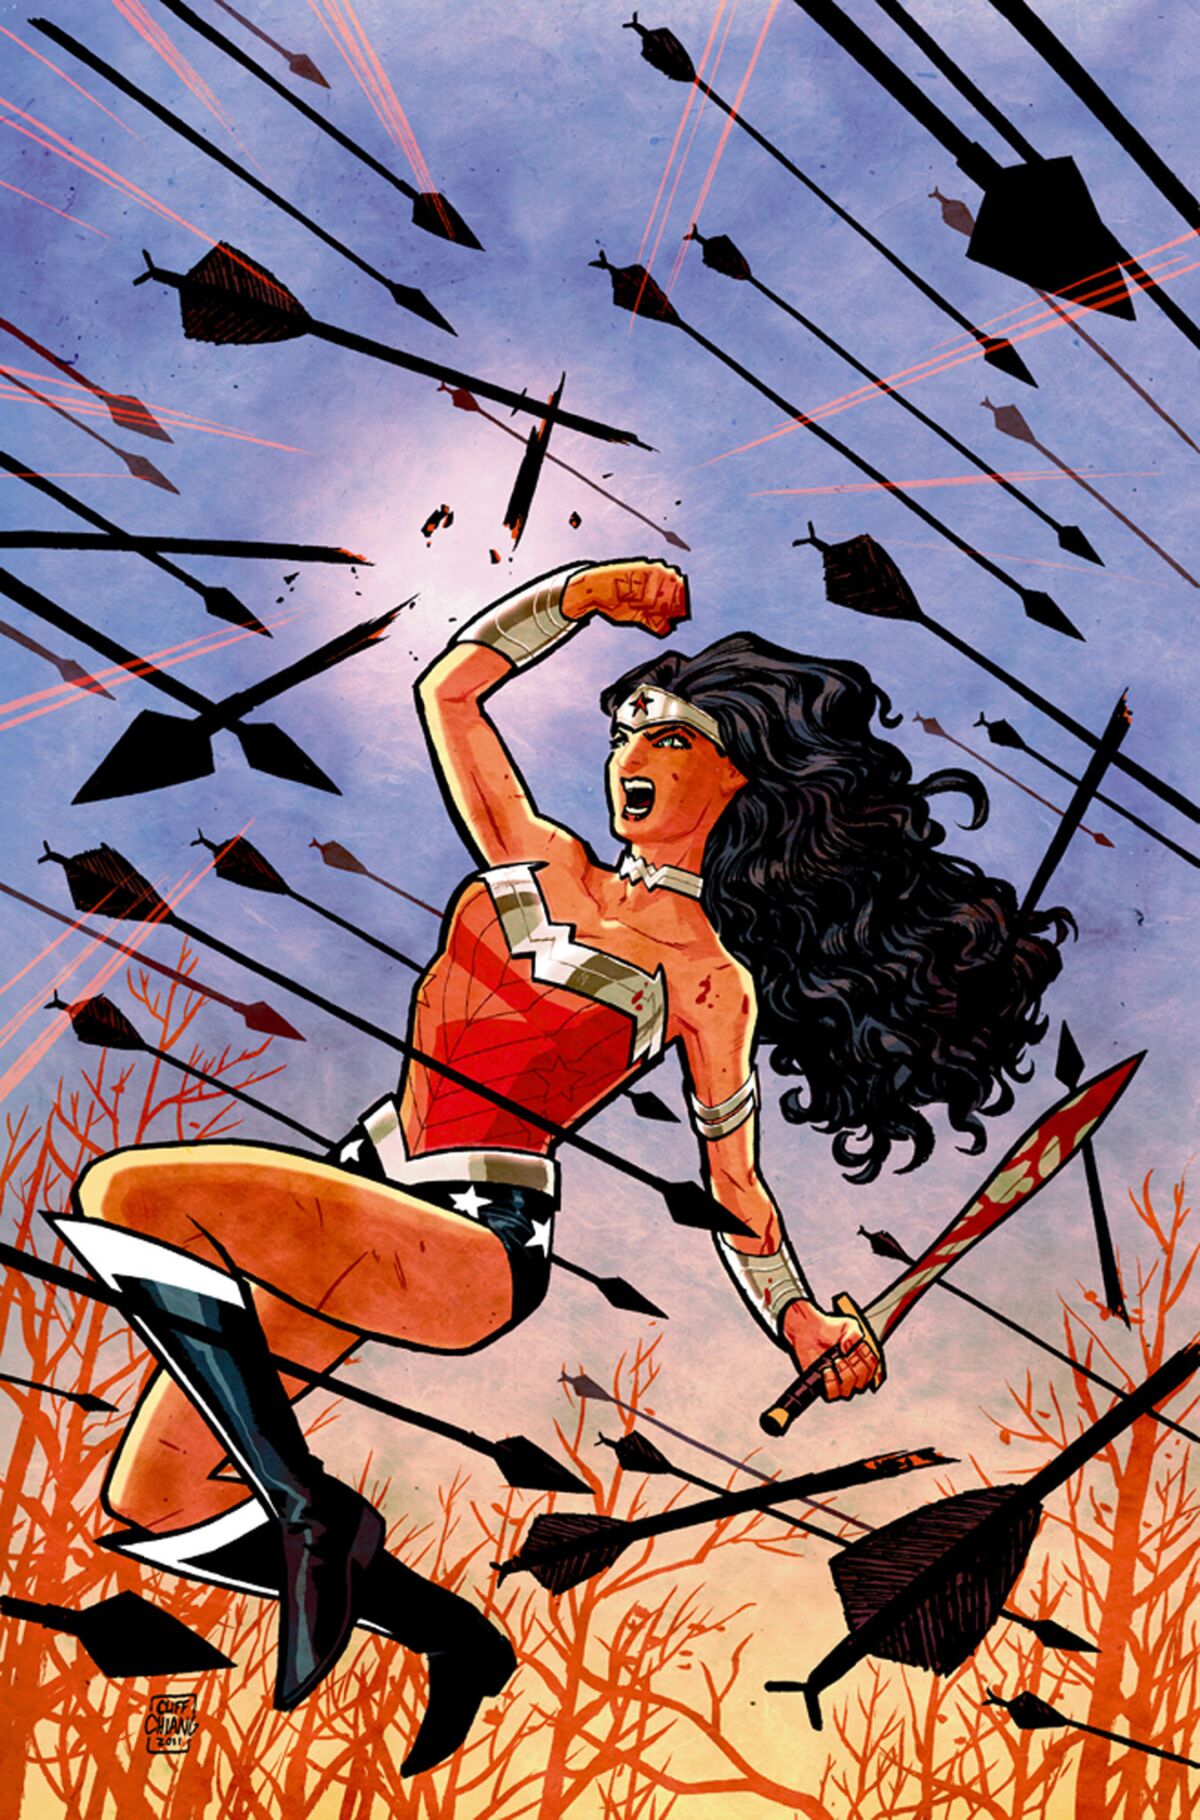 Cover of "Wonder Woman" no. 1. (Cliff Chiang/DC Comics)